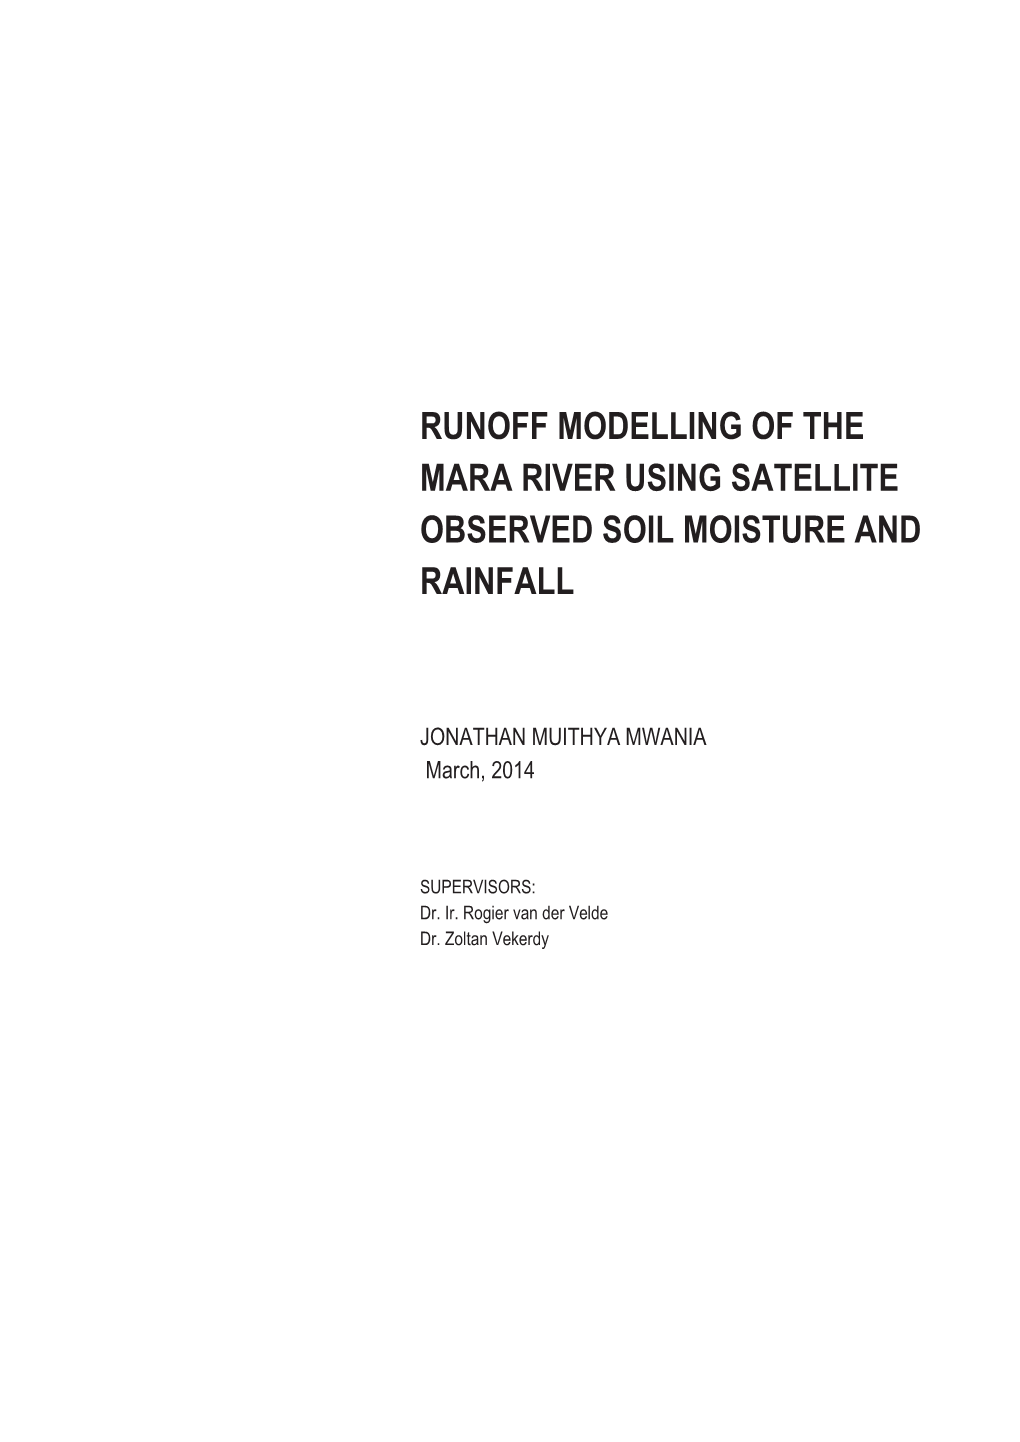 Runoff Modelling of the Mara River Using Satellite Observed Soil Moisture and Rainfall